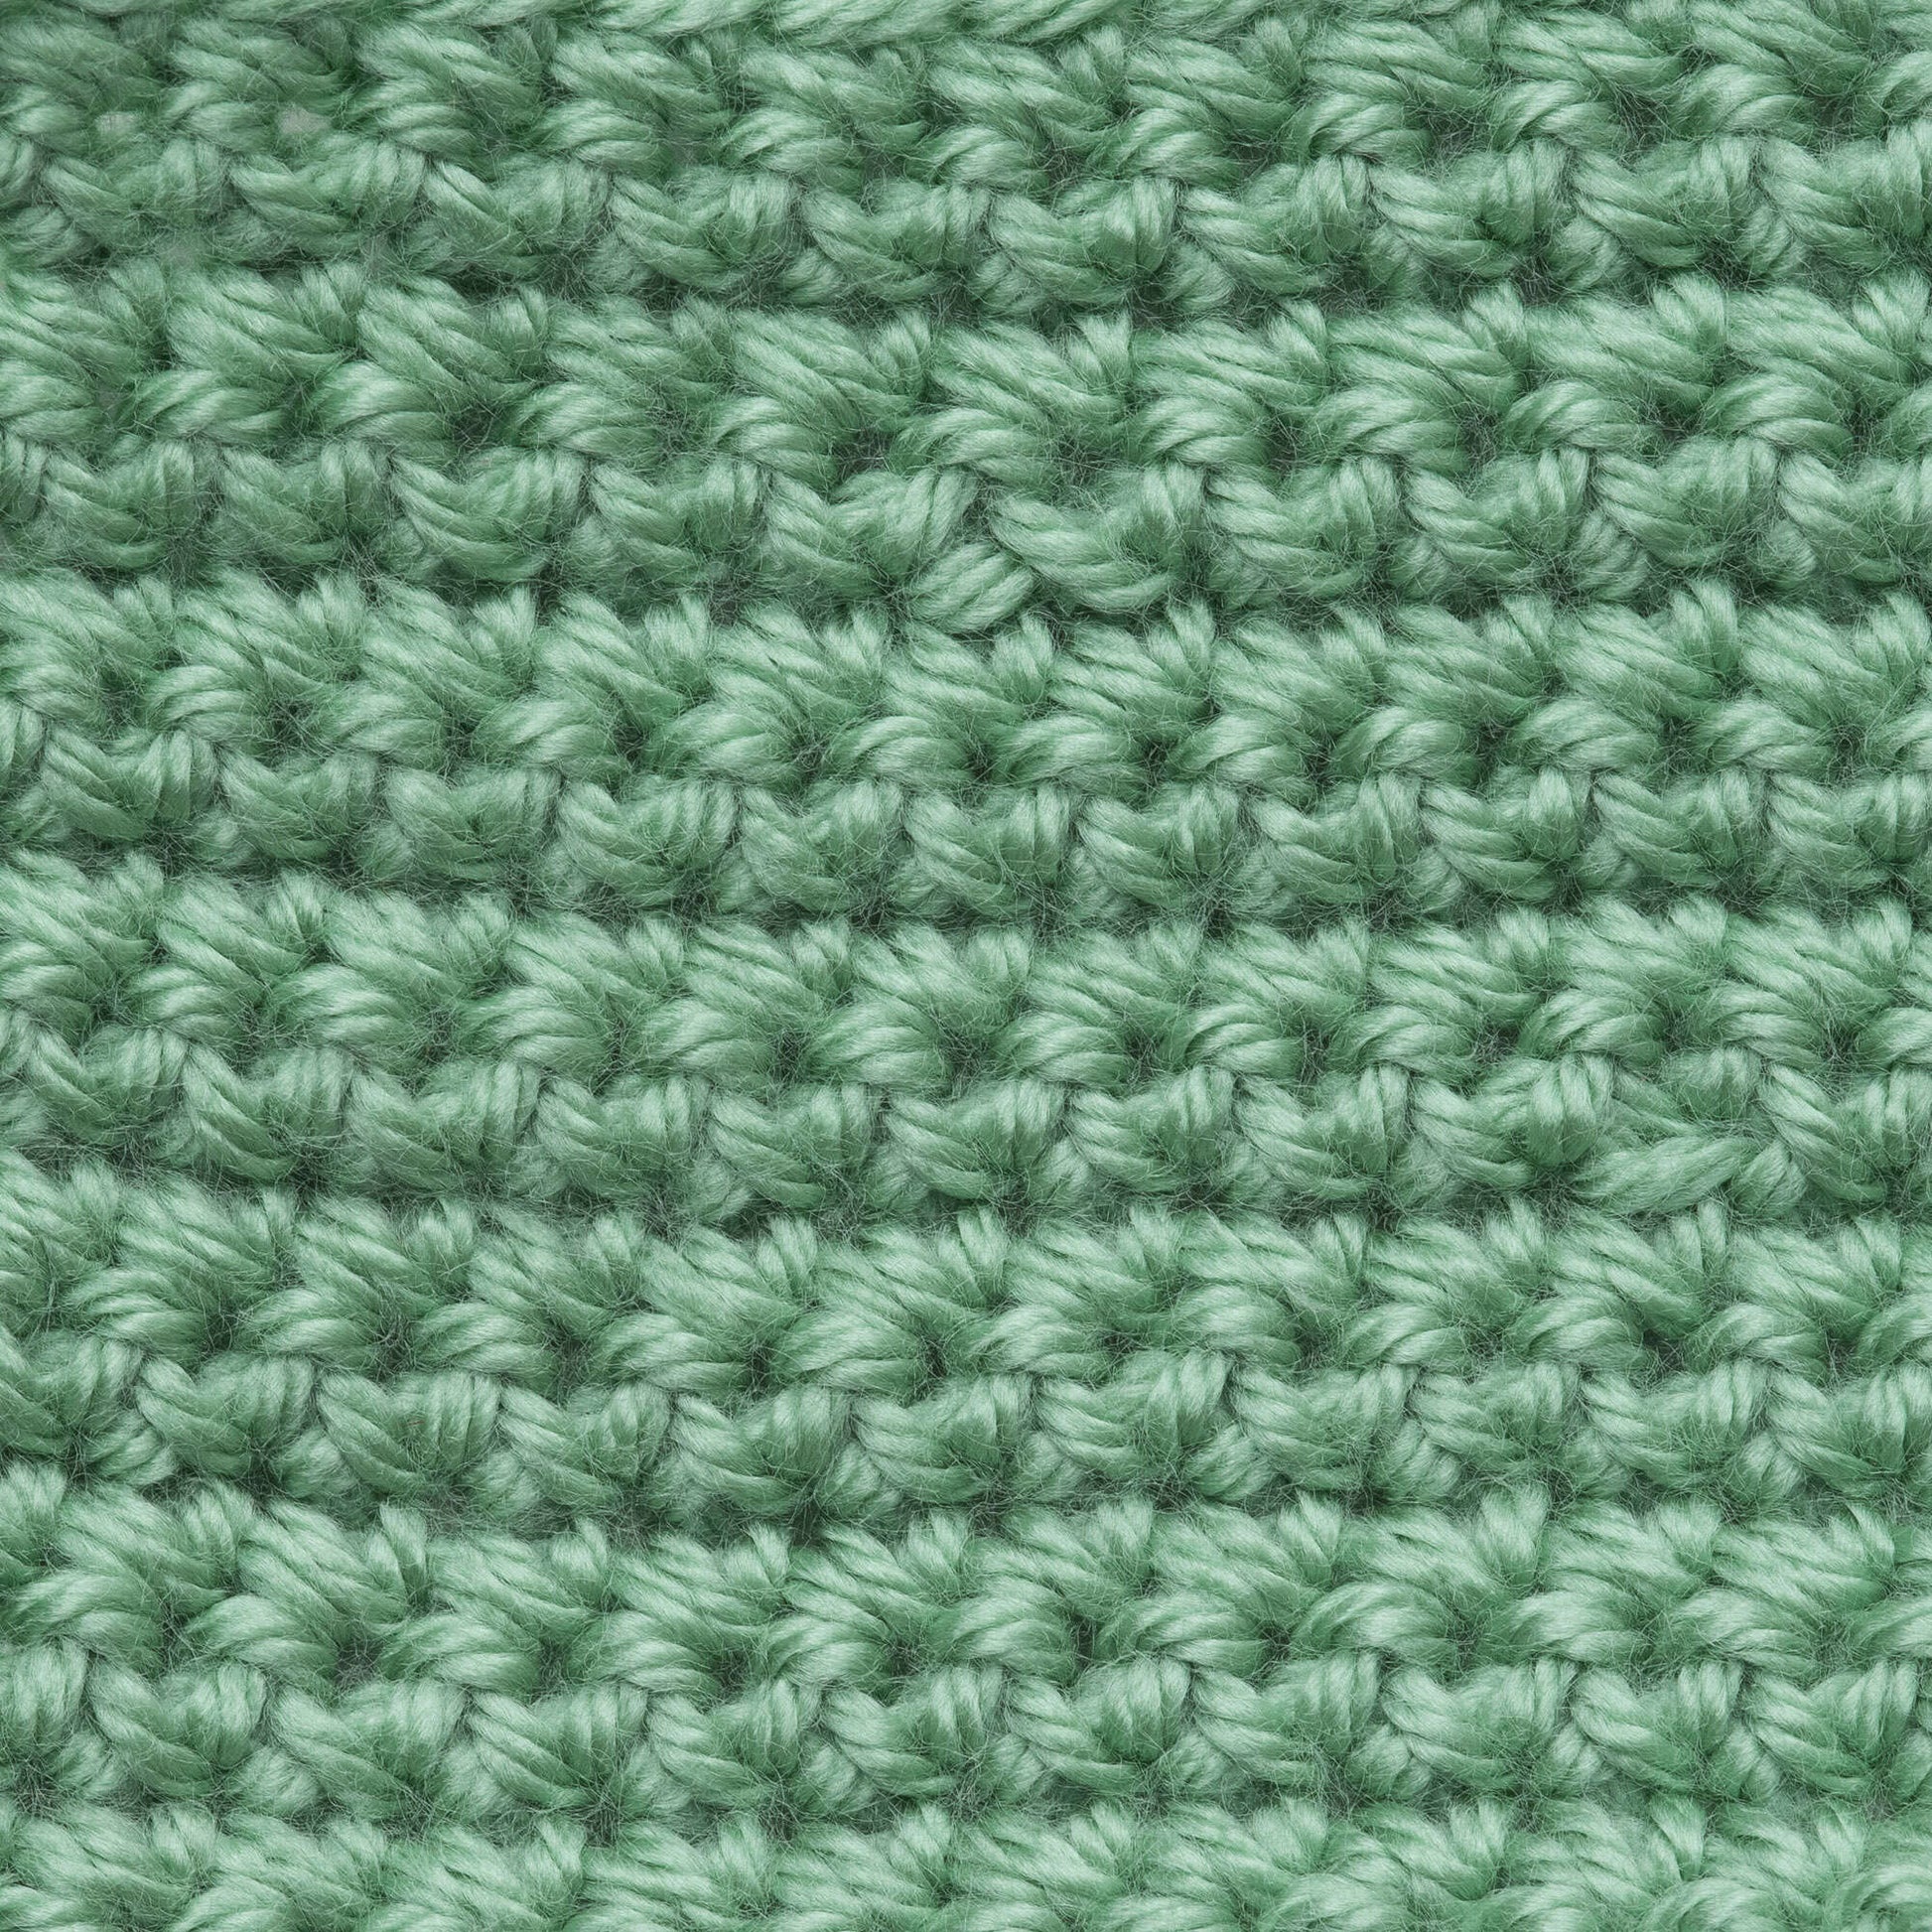 Caron Simply Soft Yarn 6oz 315yds 170g 288m No Dye Lot 100% Acrylic Yarn  Yarn Destash Crochet Knitting 